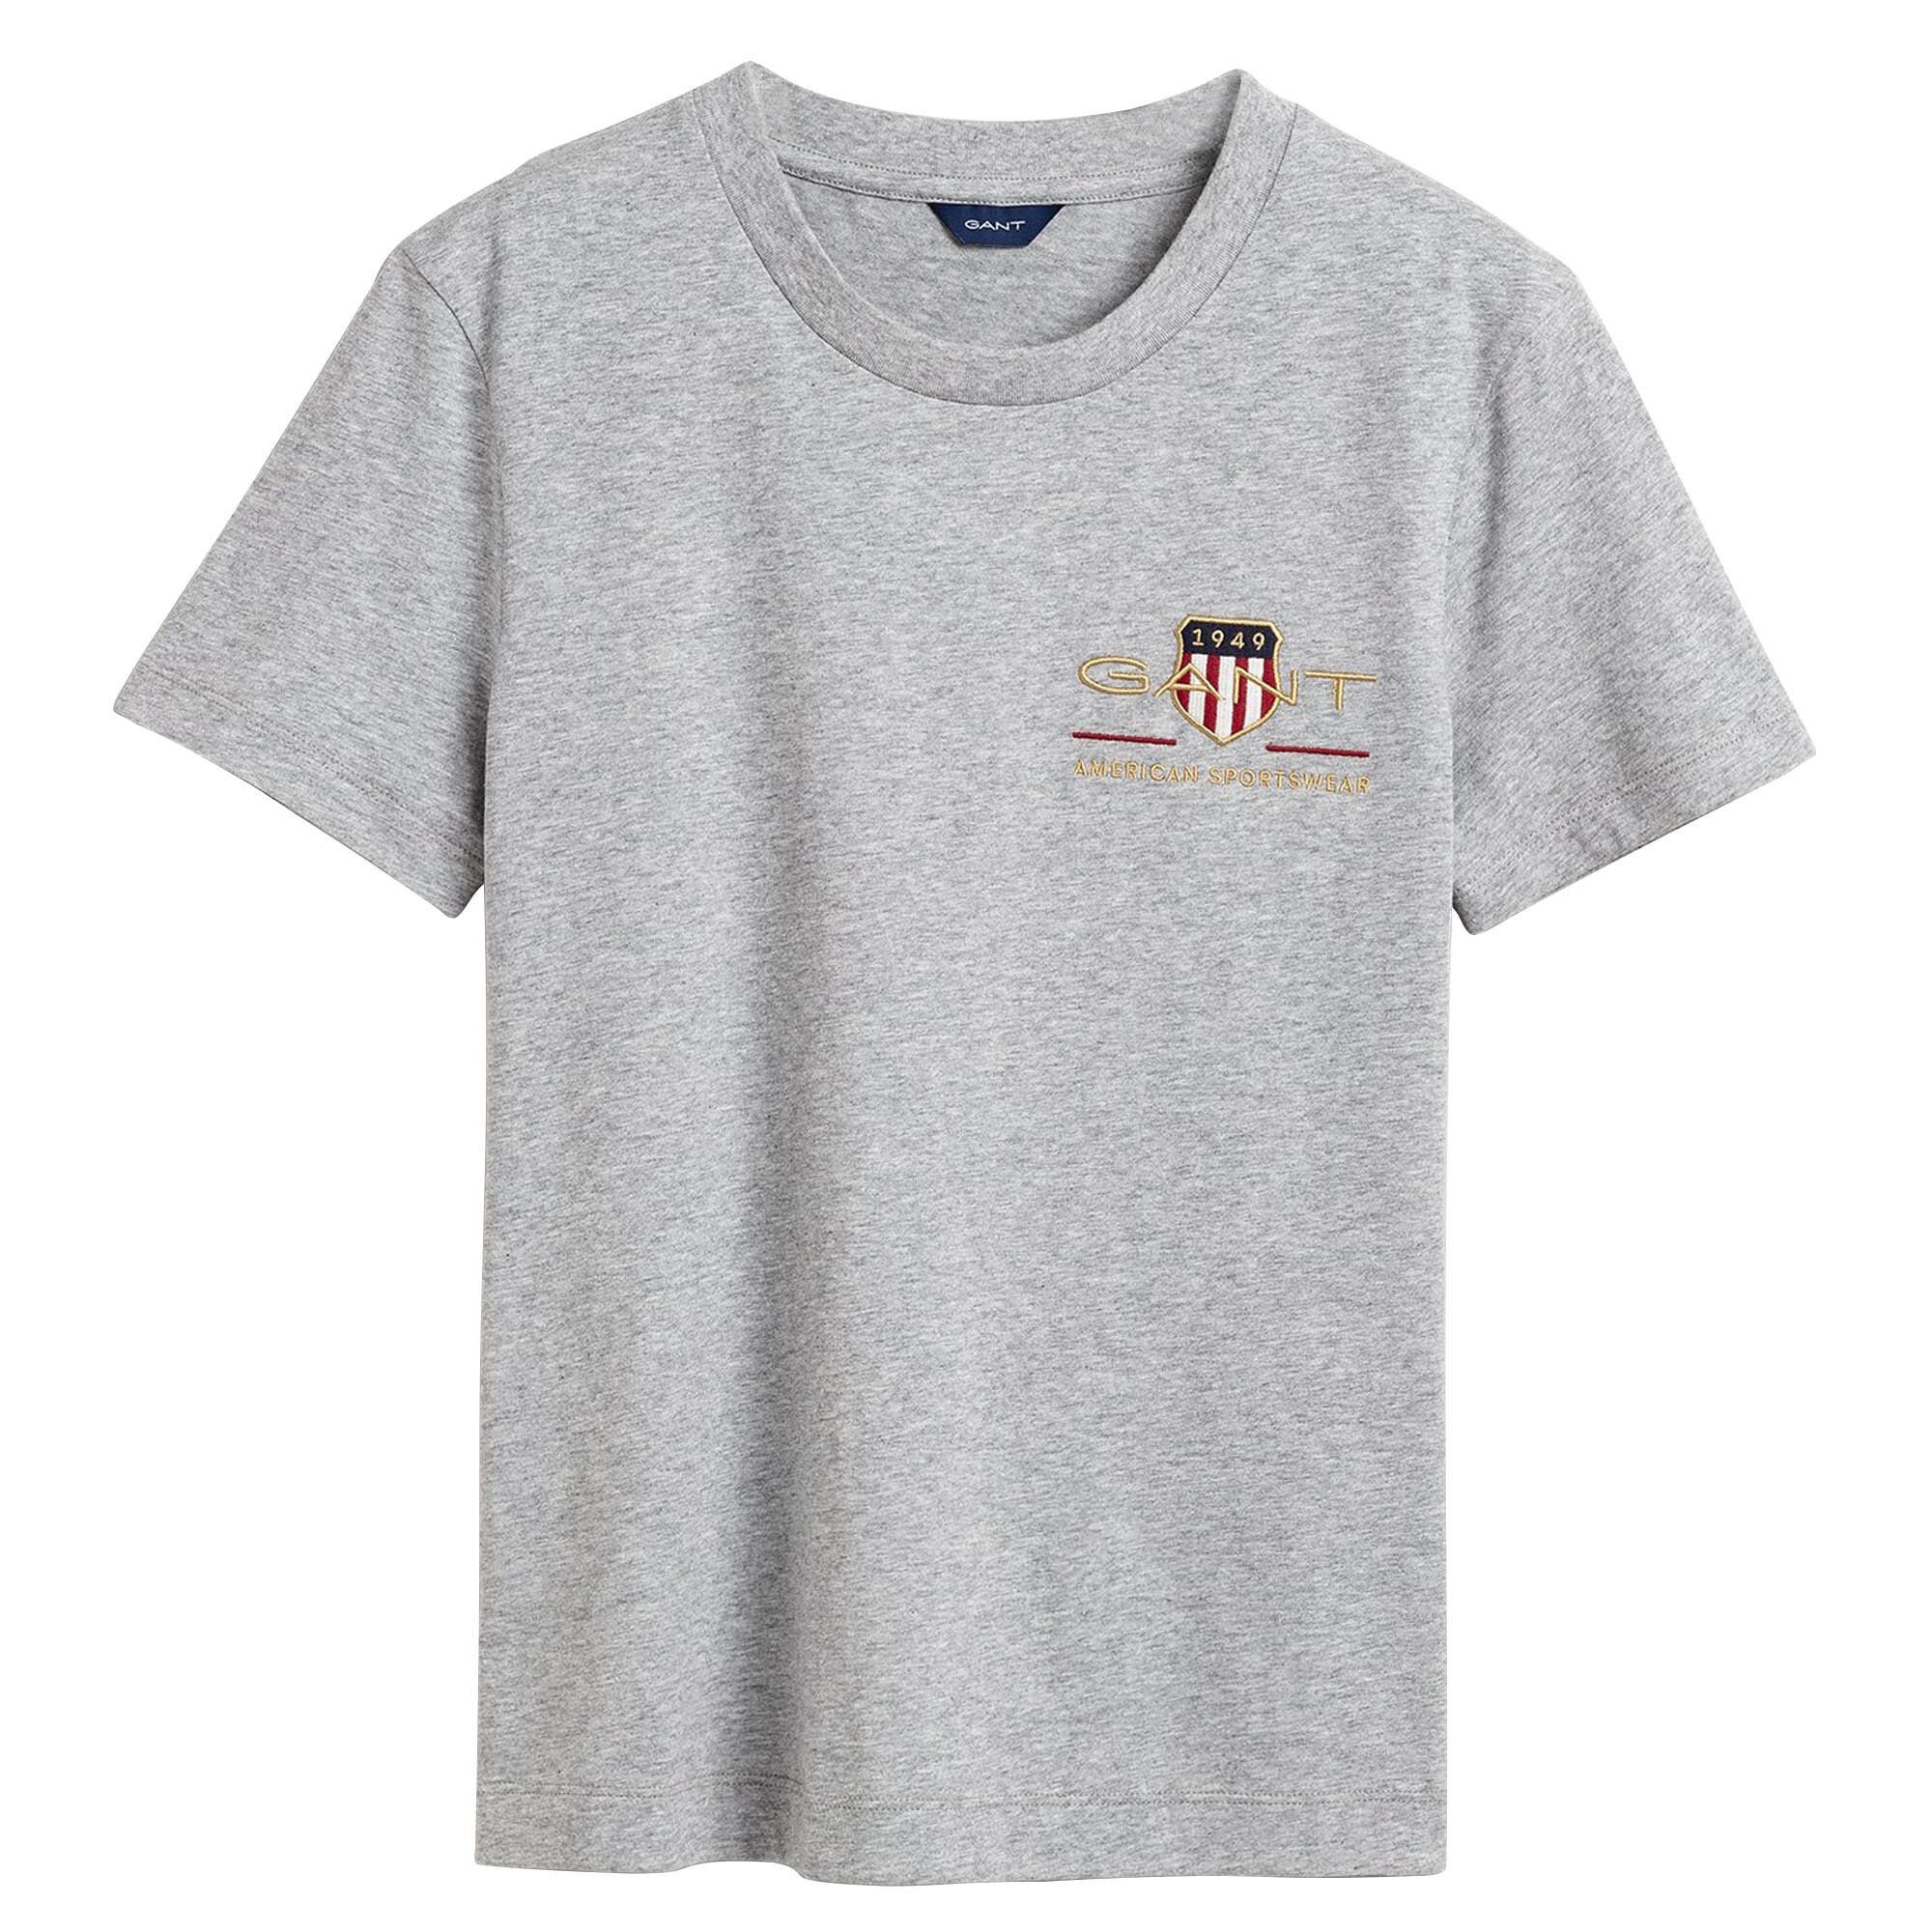 Gant T-Shirt Damen T-Shirt - Archive Shield, Rundhals, kurzarm